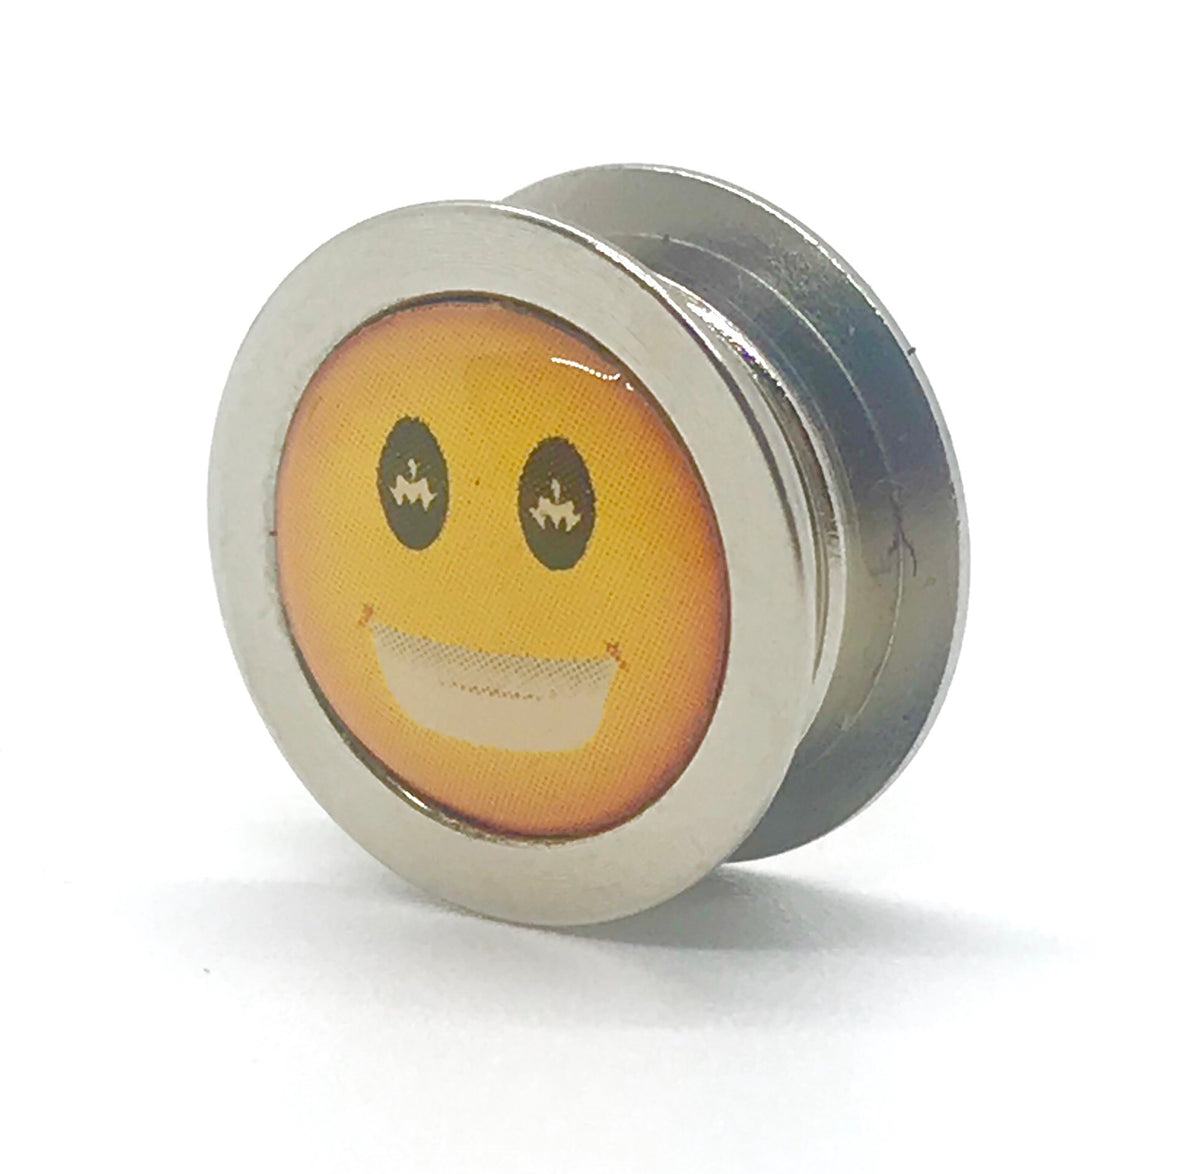 Smiley – Bib Magnets